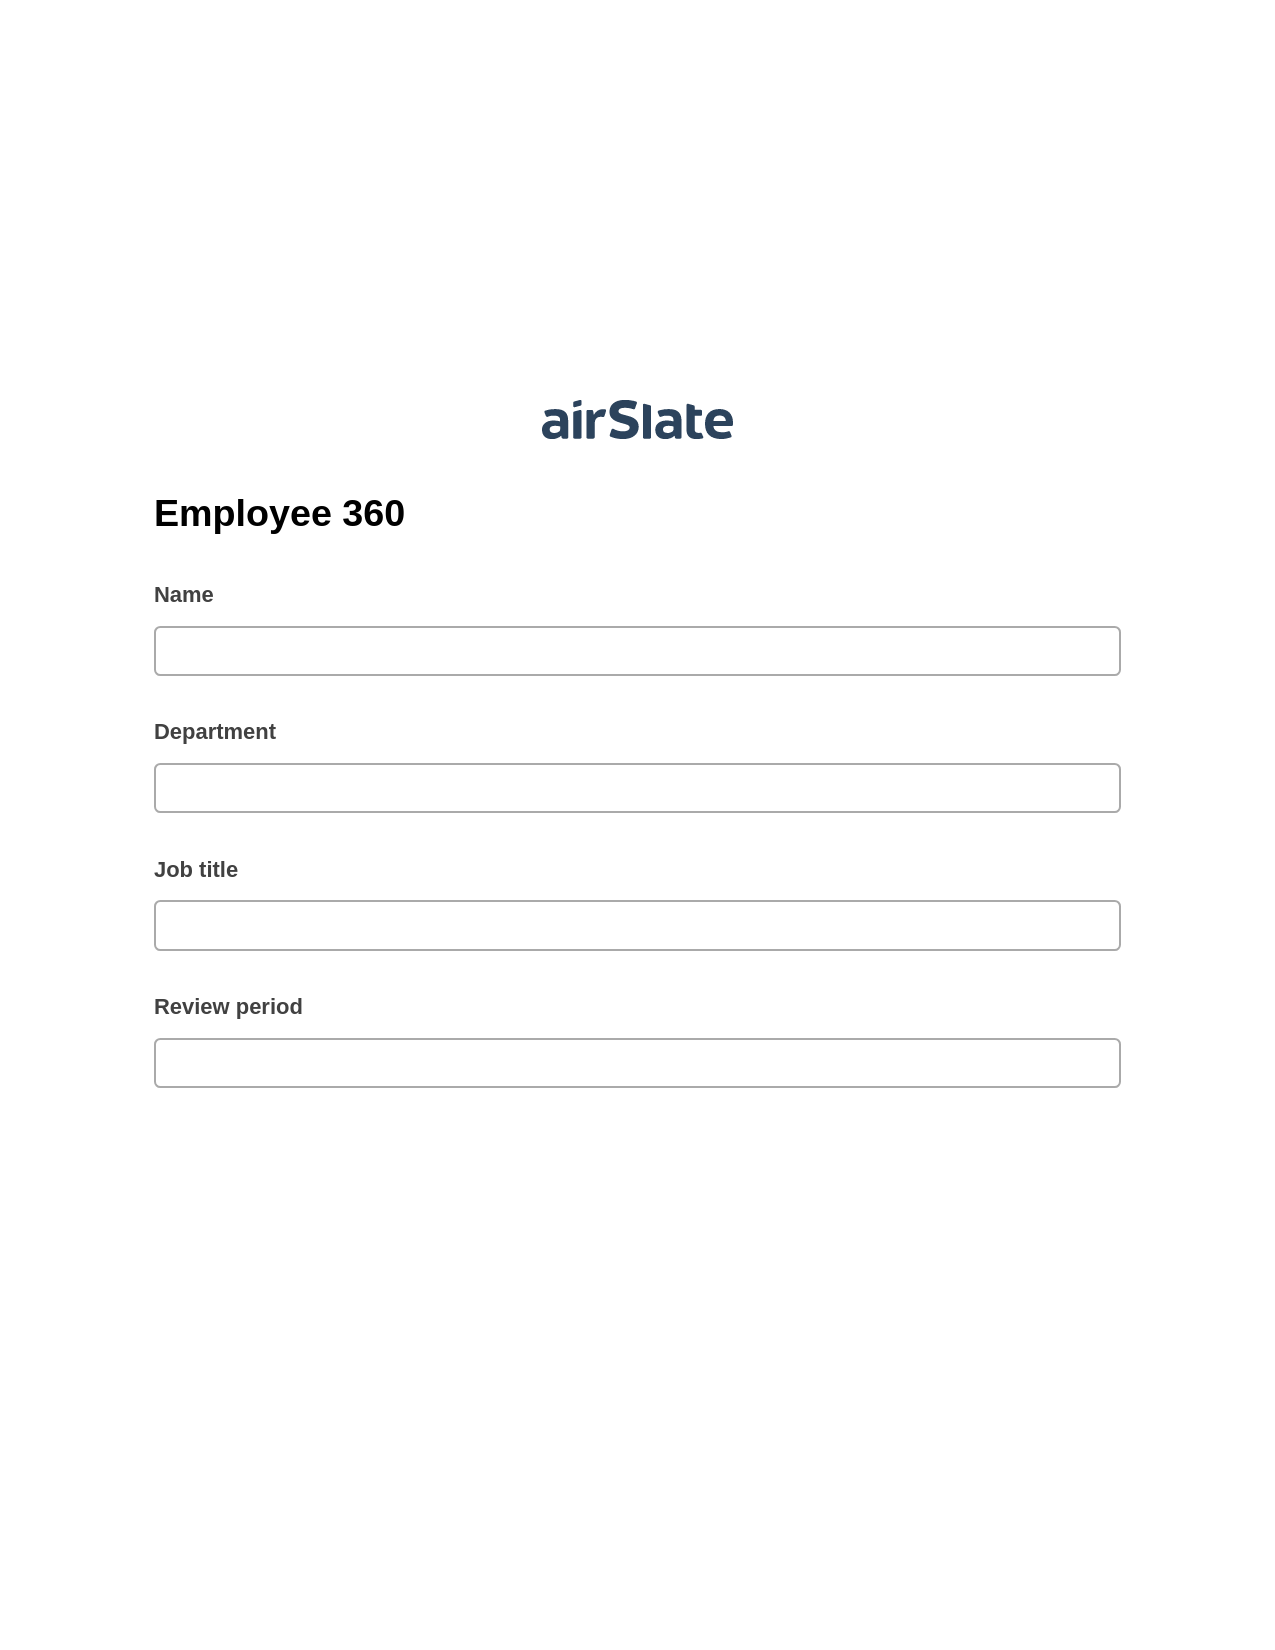 Employee 360 Prefill from NetSuite records, Invoke Salesforce Process Bot, Email Notification Postfinish Bot